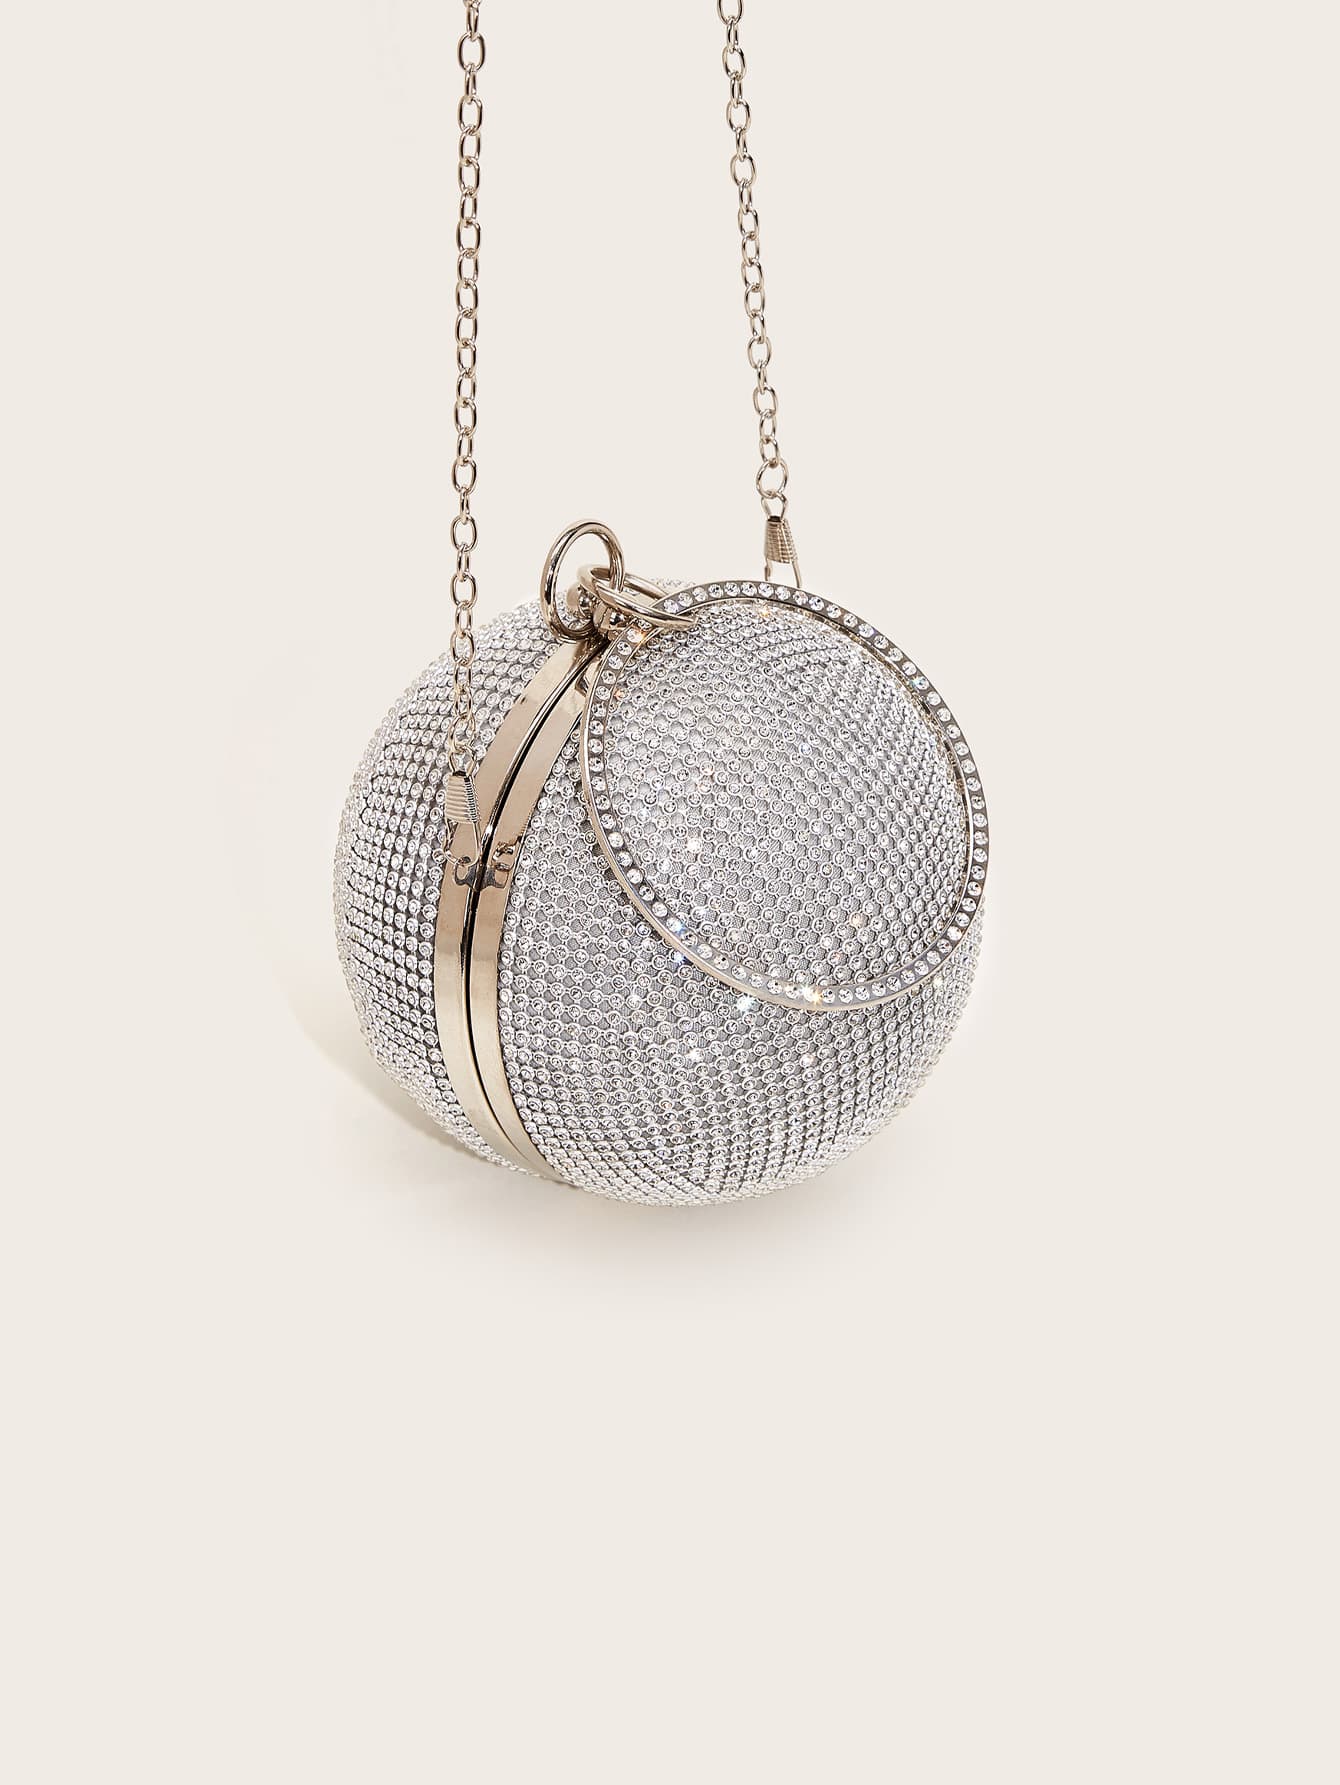 Mini Rhinestone Covered Ball Design Clutch Bag